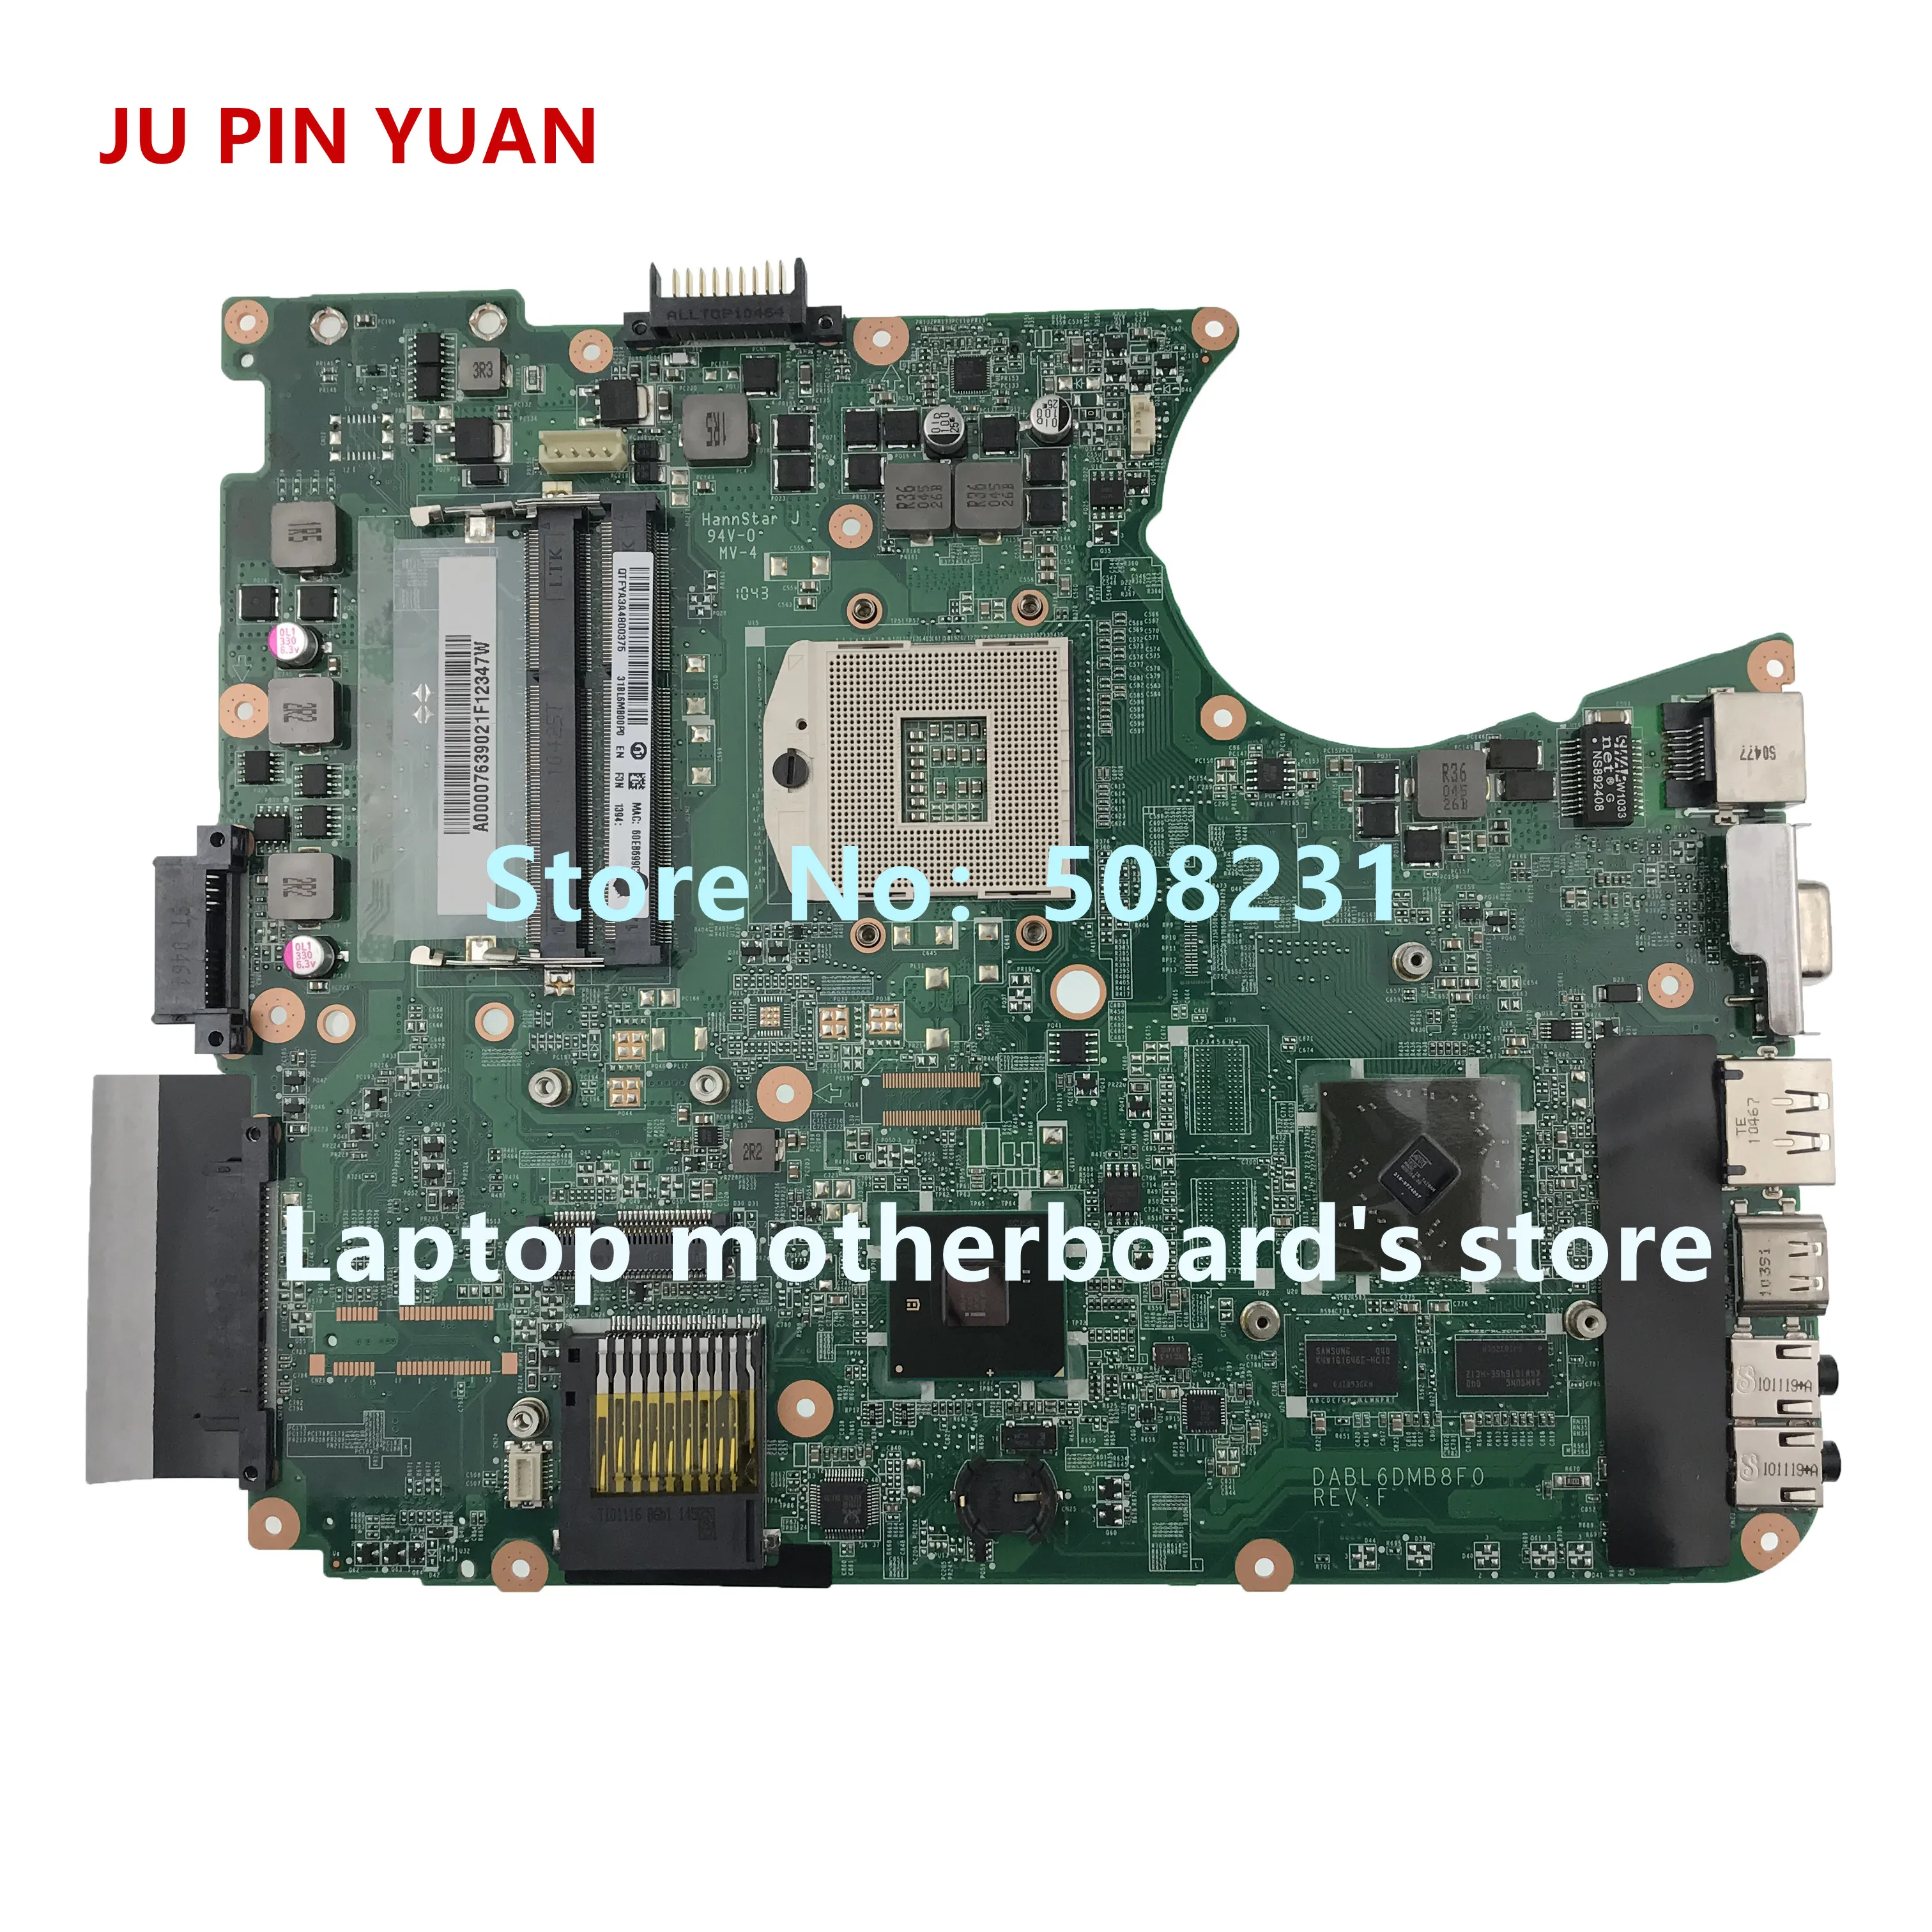 Ju pin yuan A000076390 материнская плата dbl6dmb8f0 для toshiba satellite L650 L655 ноутбука 100% полностью